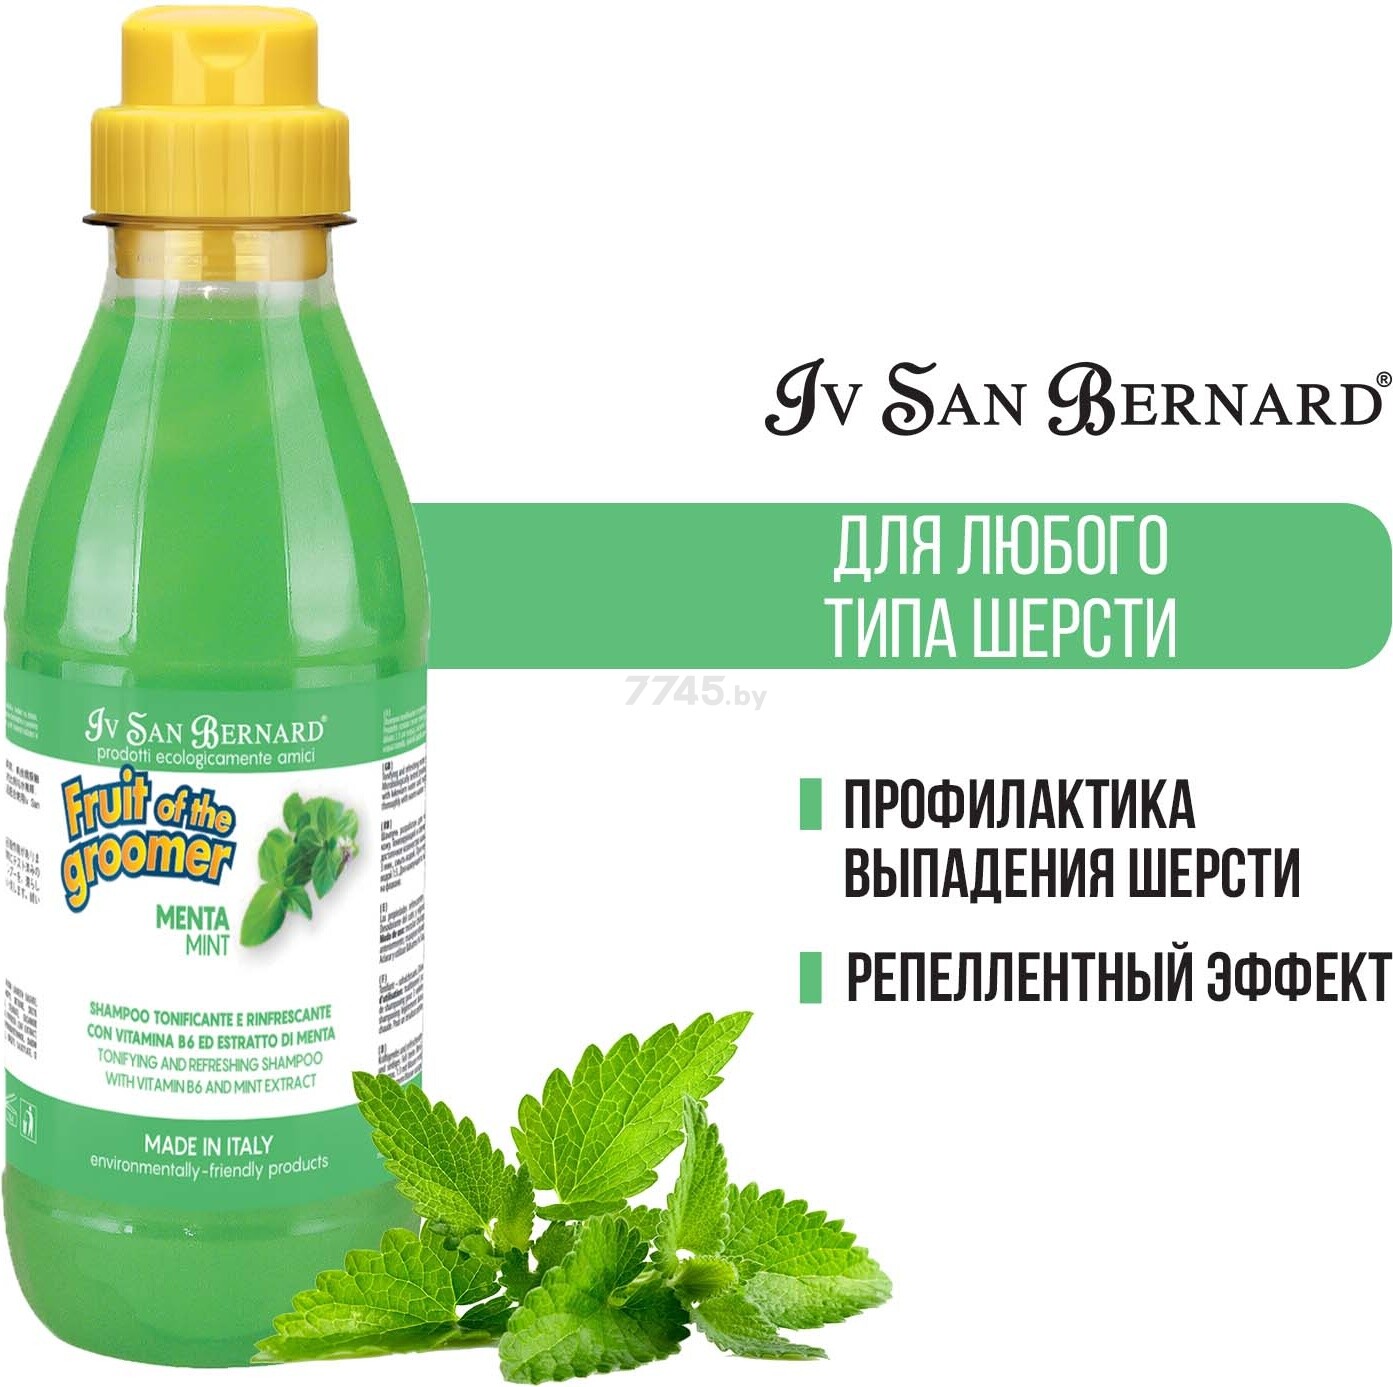 Шампунь для животных IV SAN BERNARD Fruit Of The Groomer Mint с витамином B6 500 мл (NSHAME500) - Фото 2